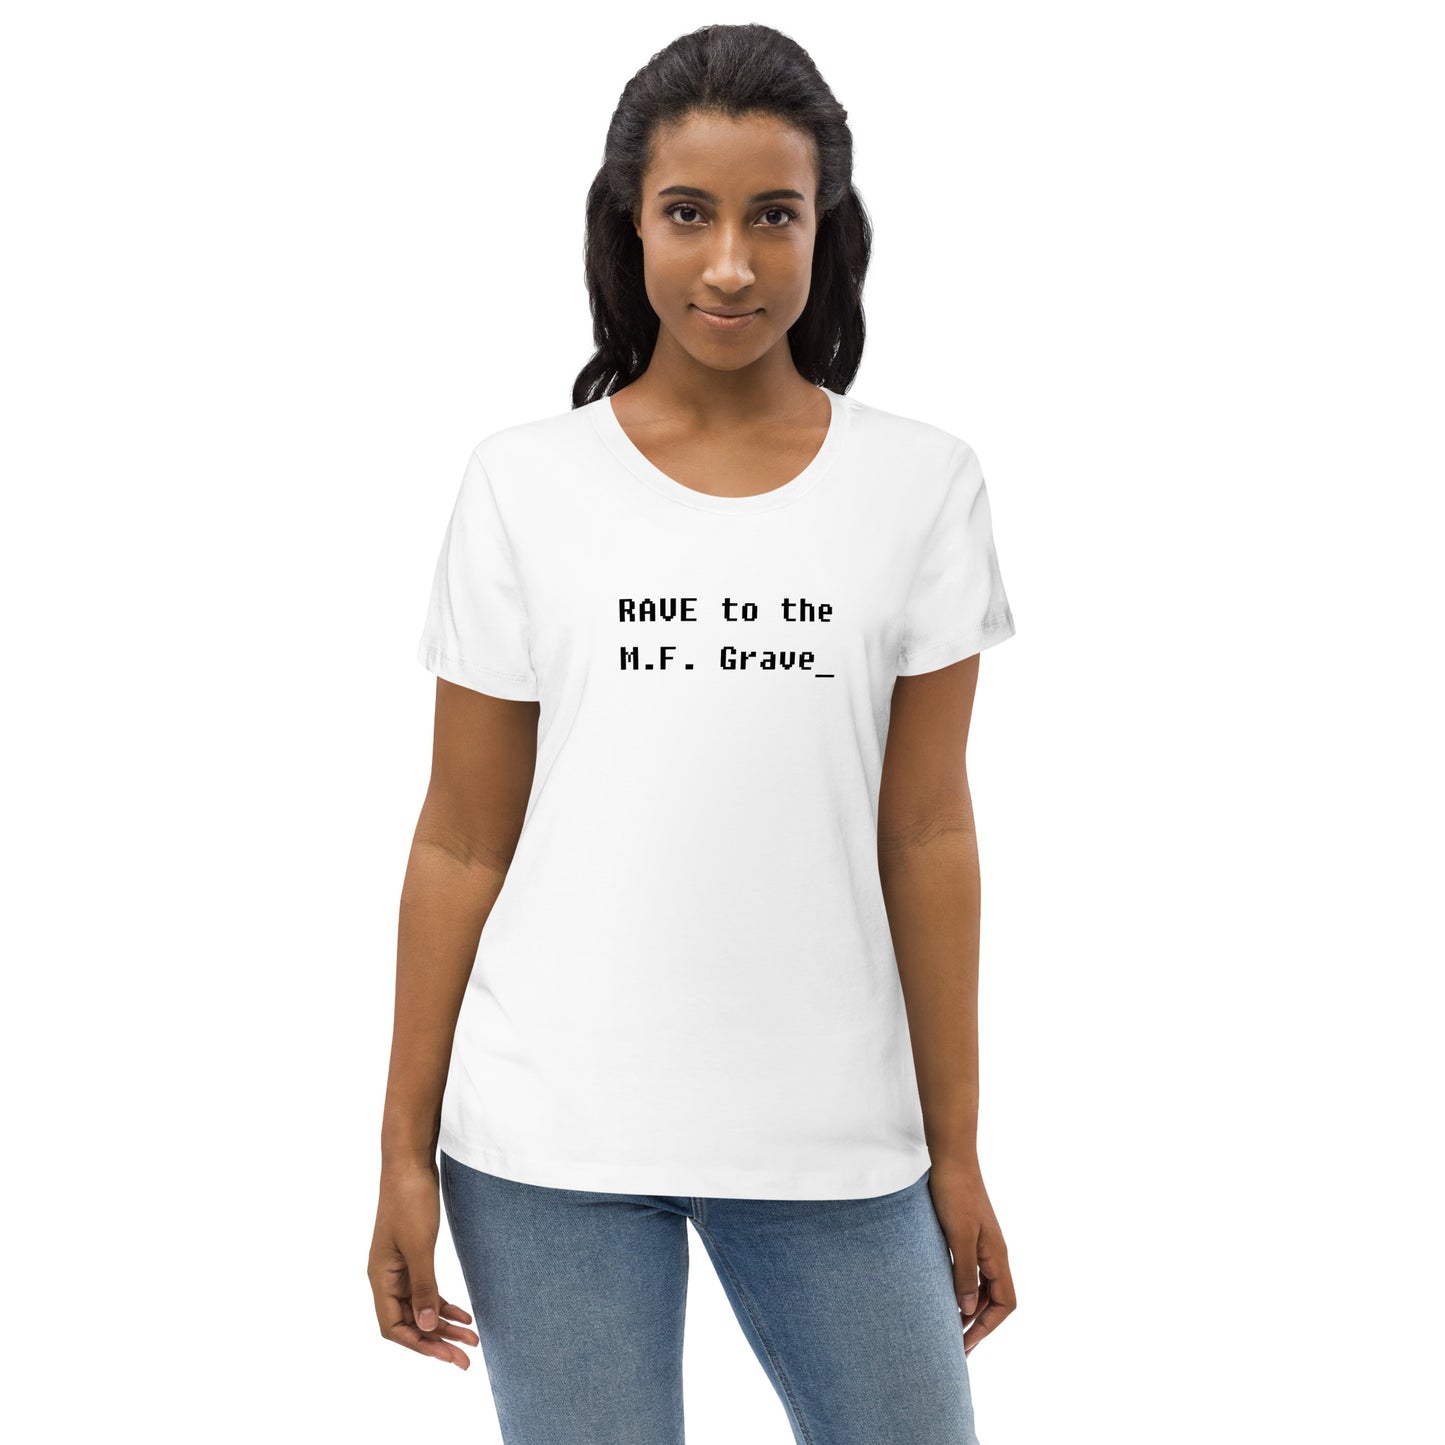 RTMFG - Women's Fitted T-shirt